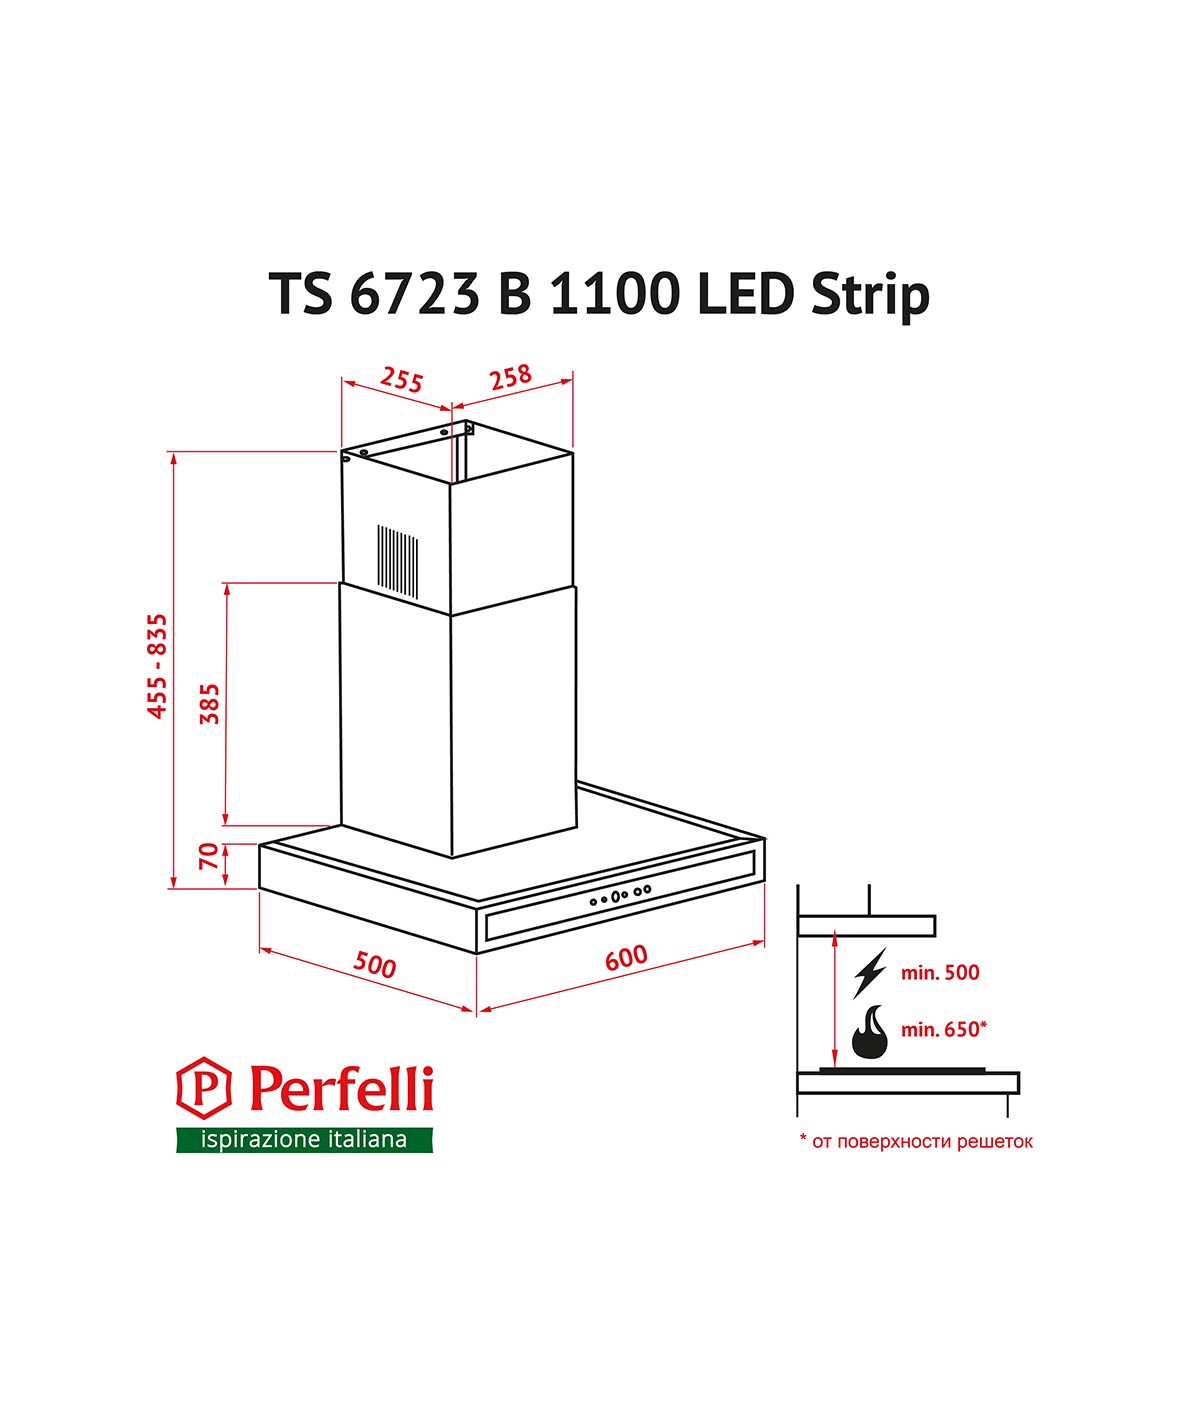 Perfelli TS 6723 B 1100 I/BL LED Strip Габаритные размеры